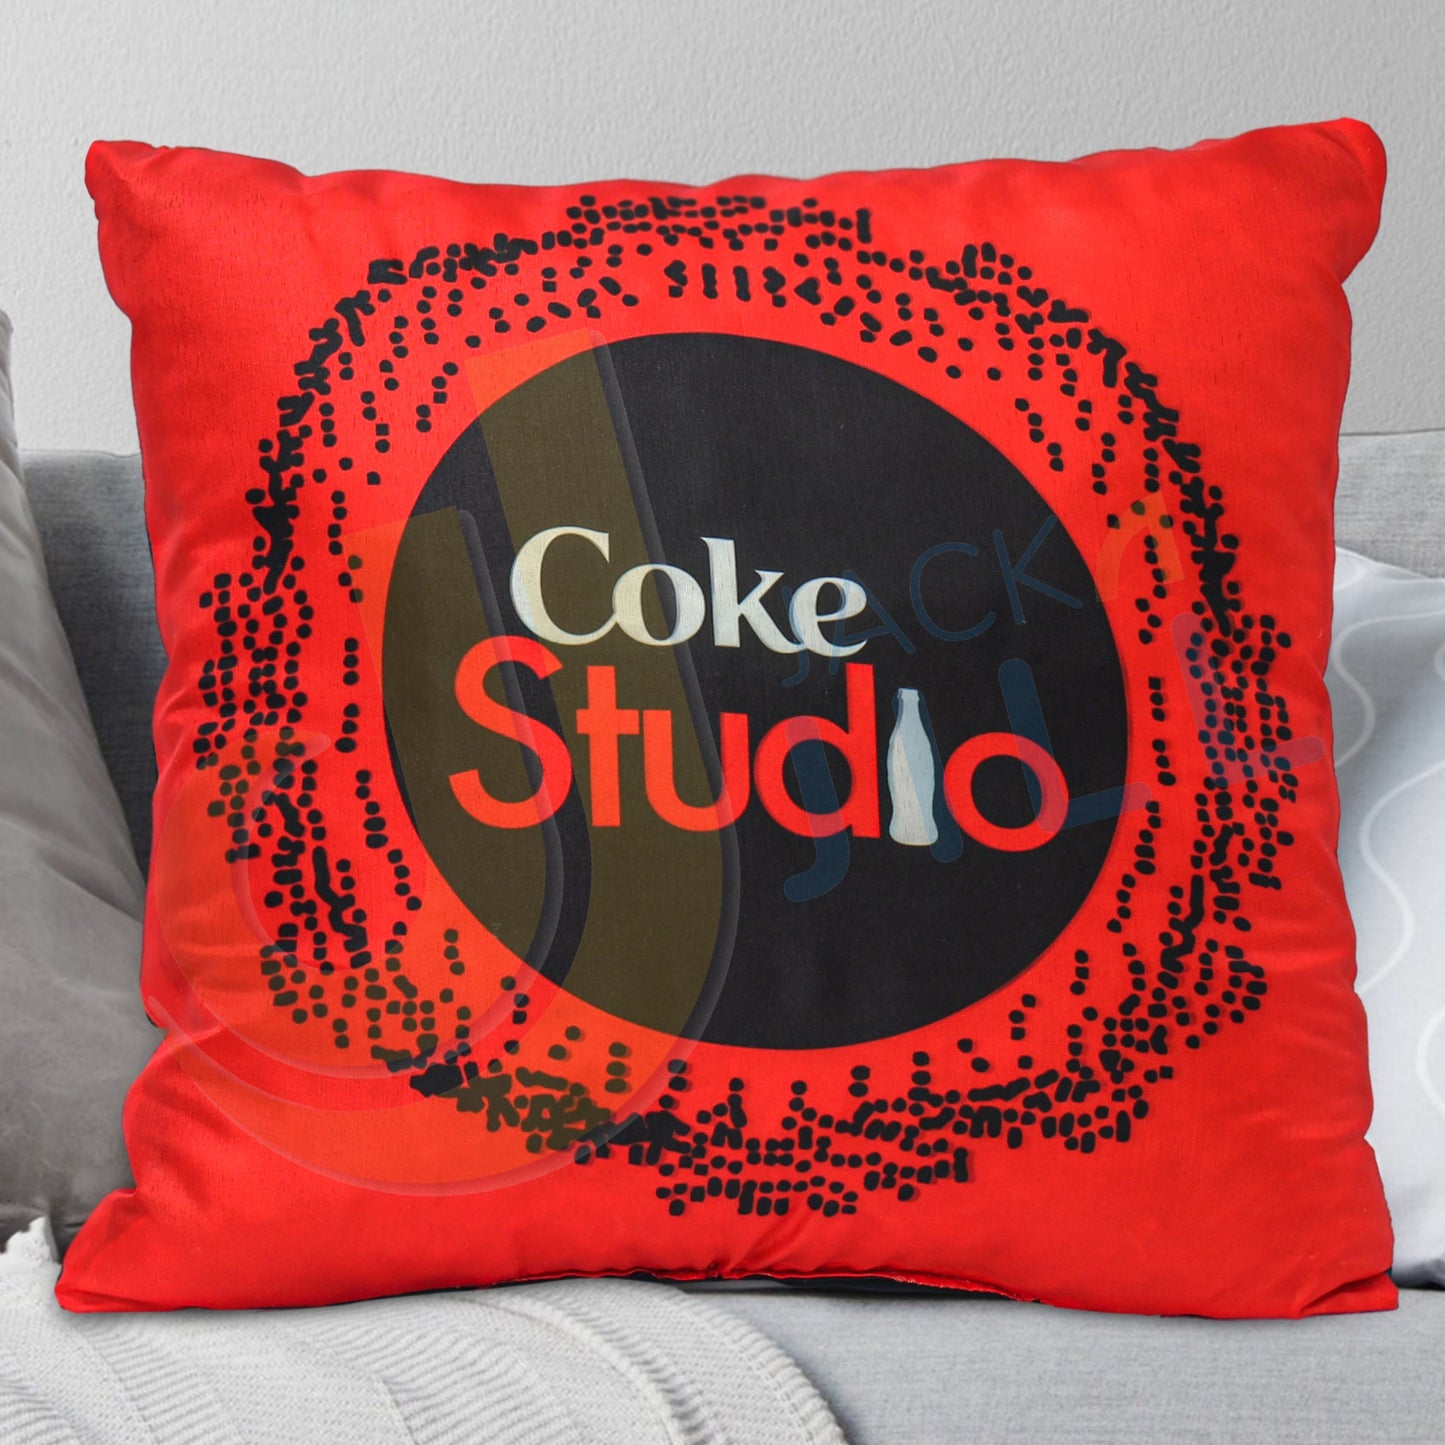 Coke Studio Filled Cushion